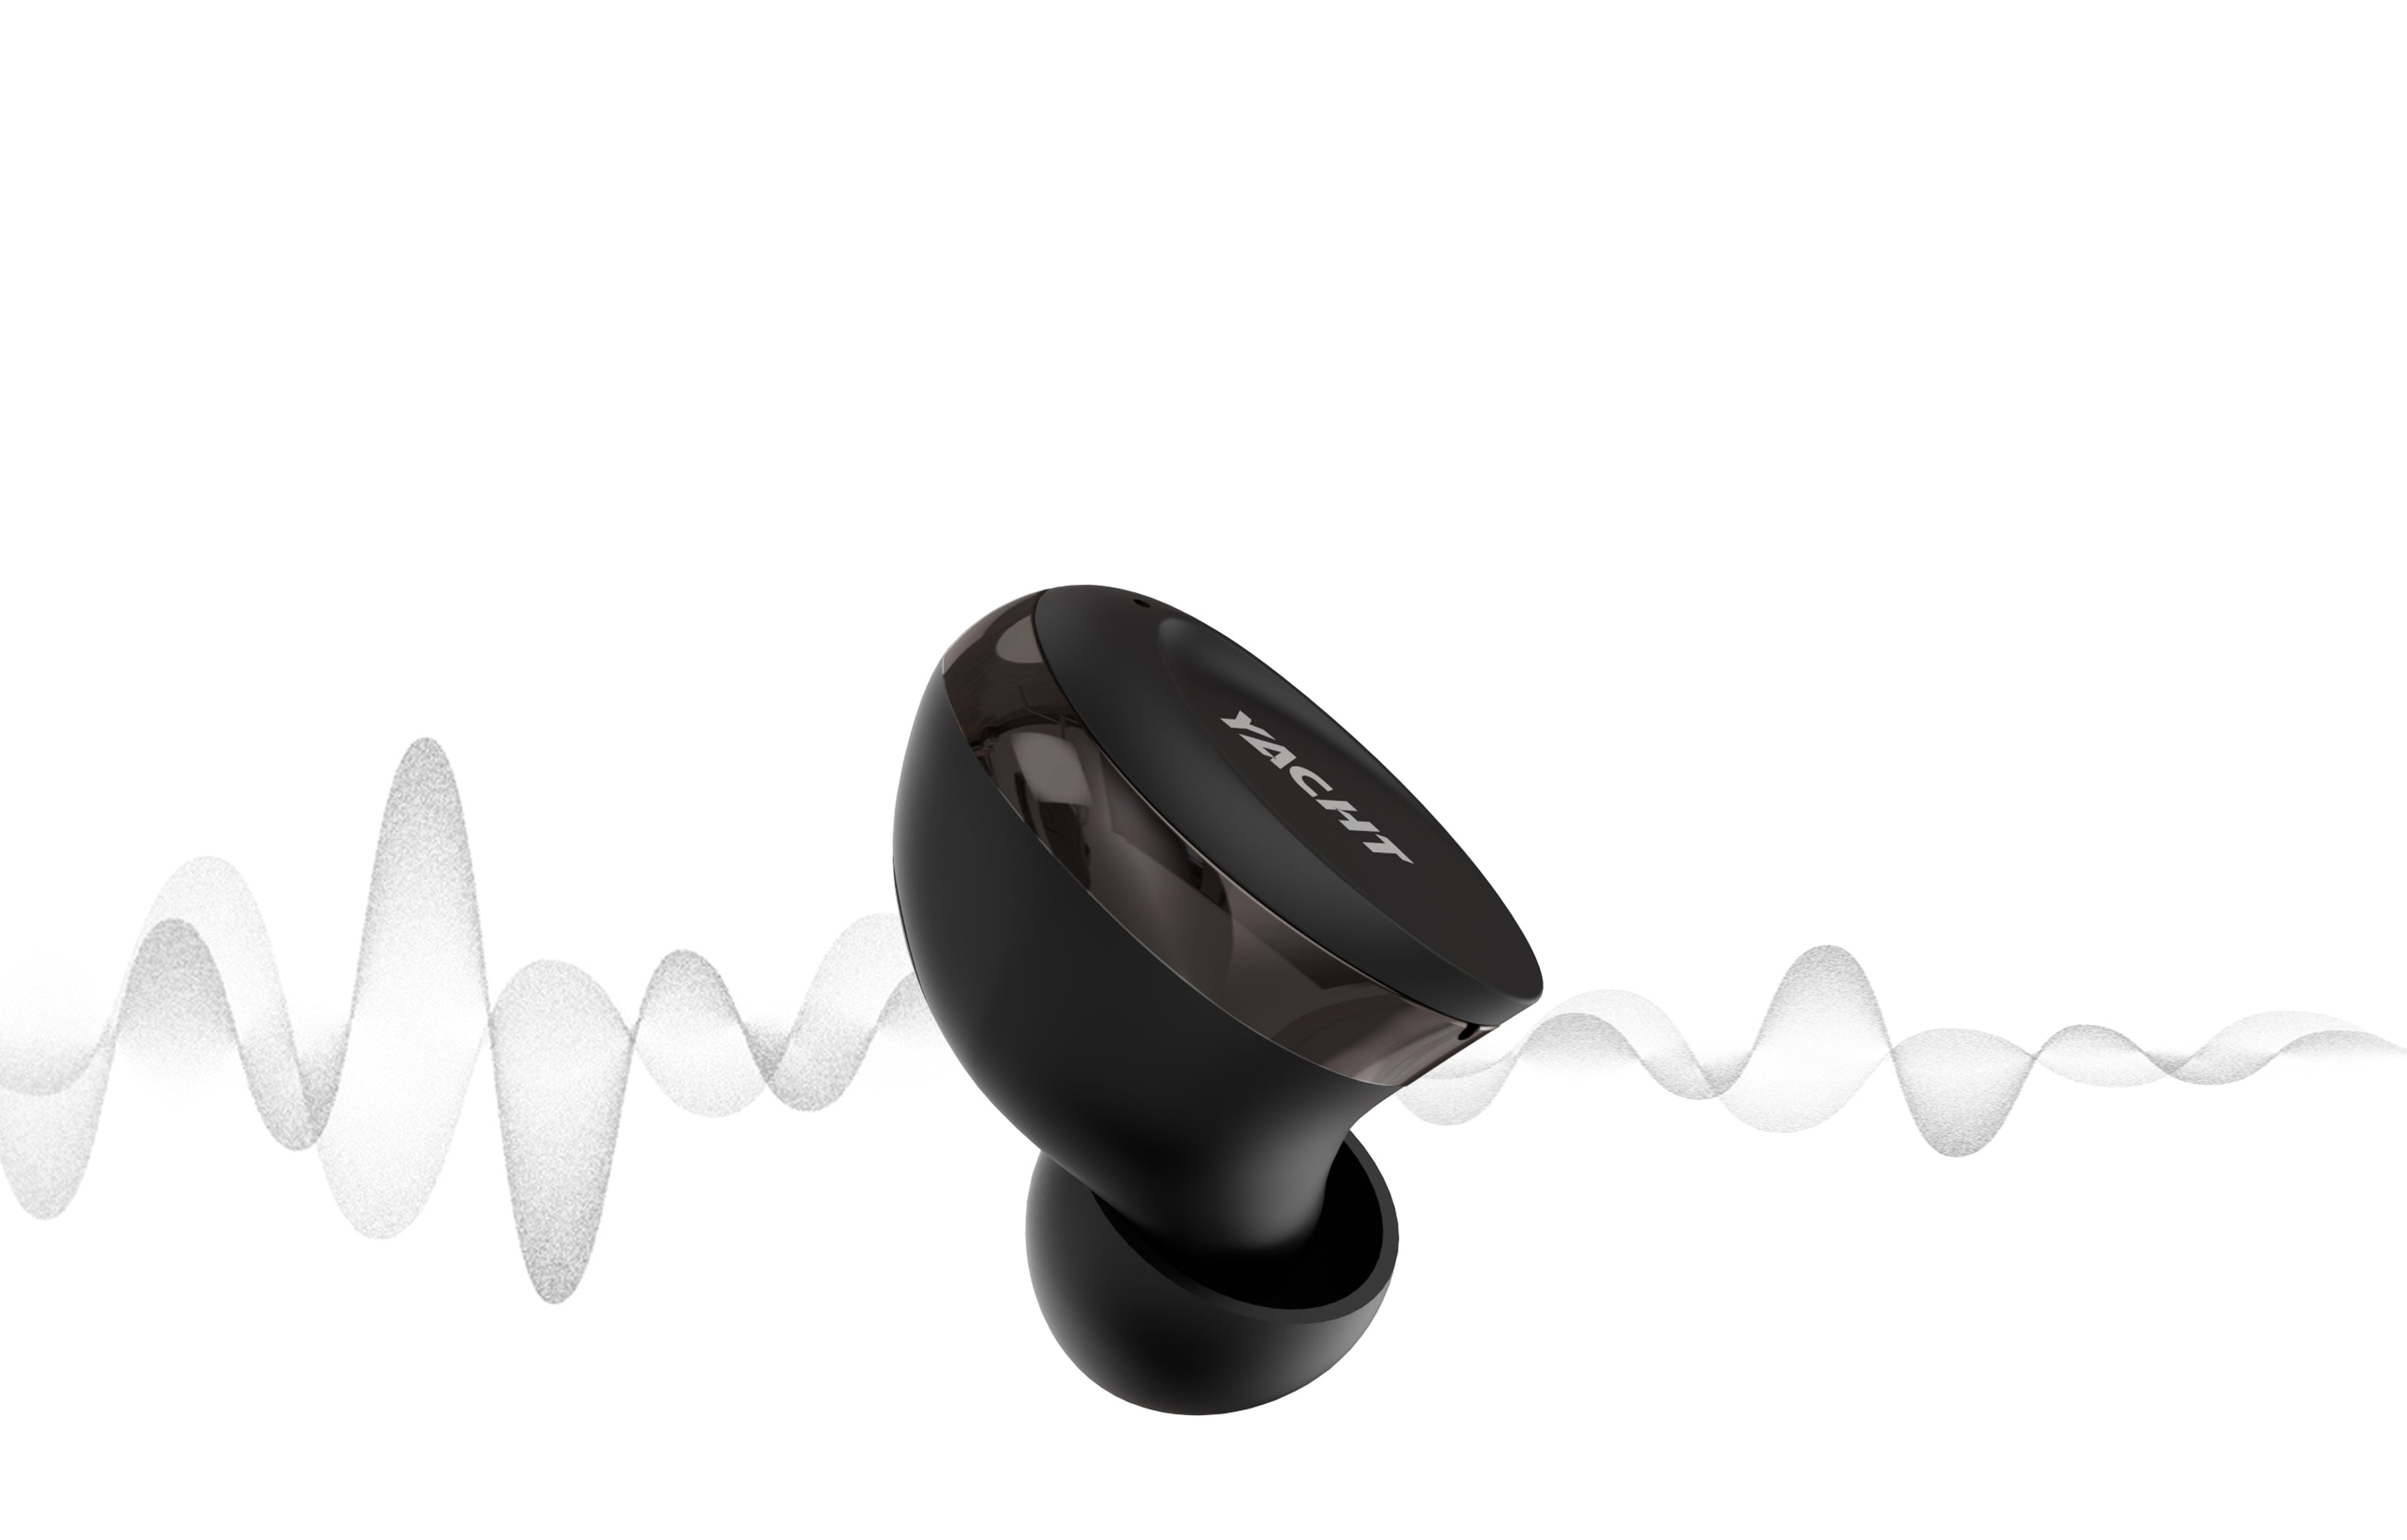 Yacht wireless earbuds with quality sound